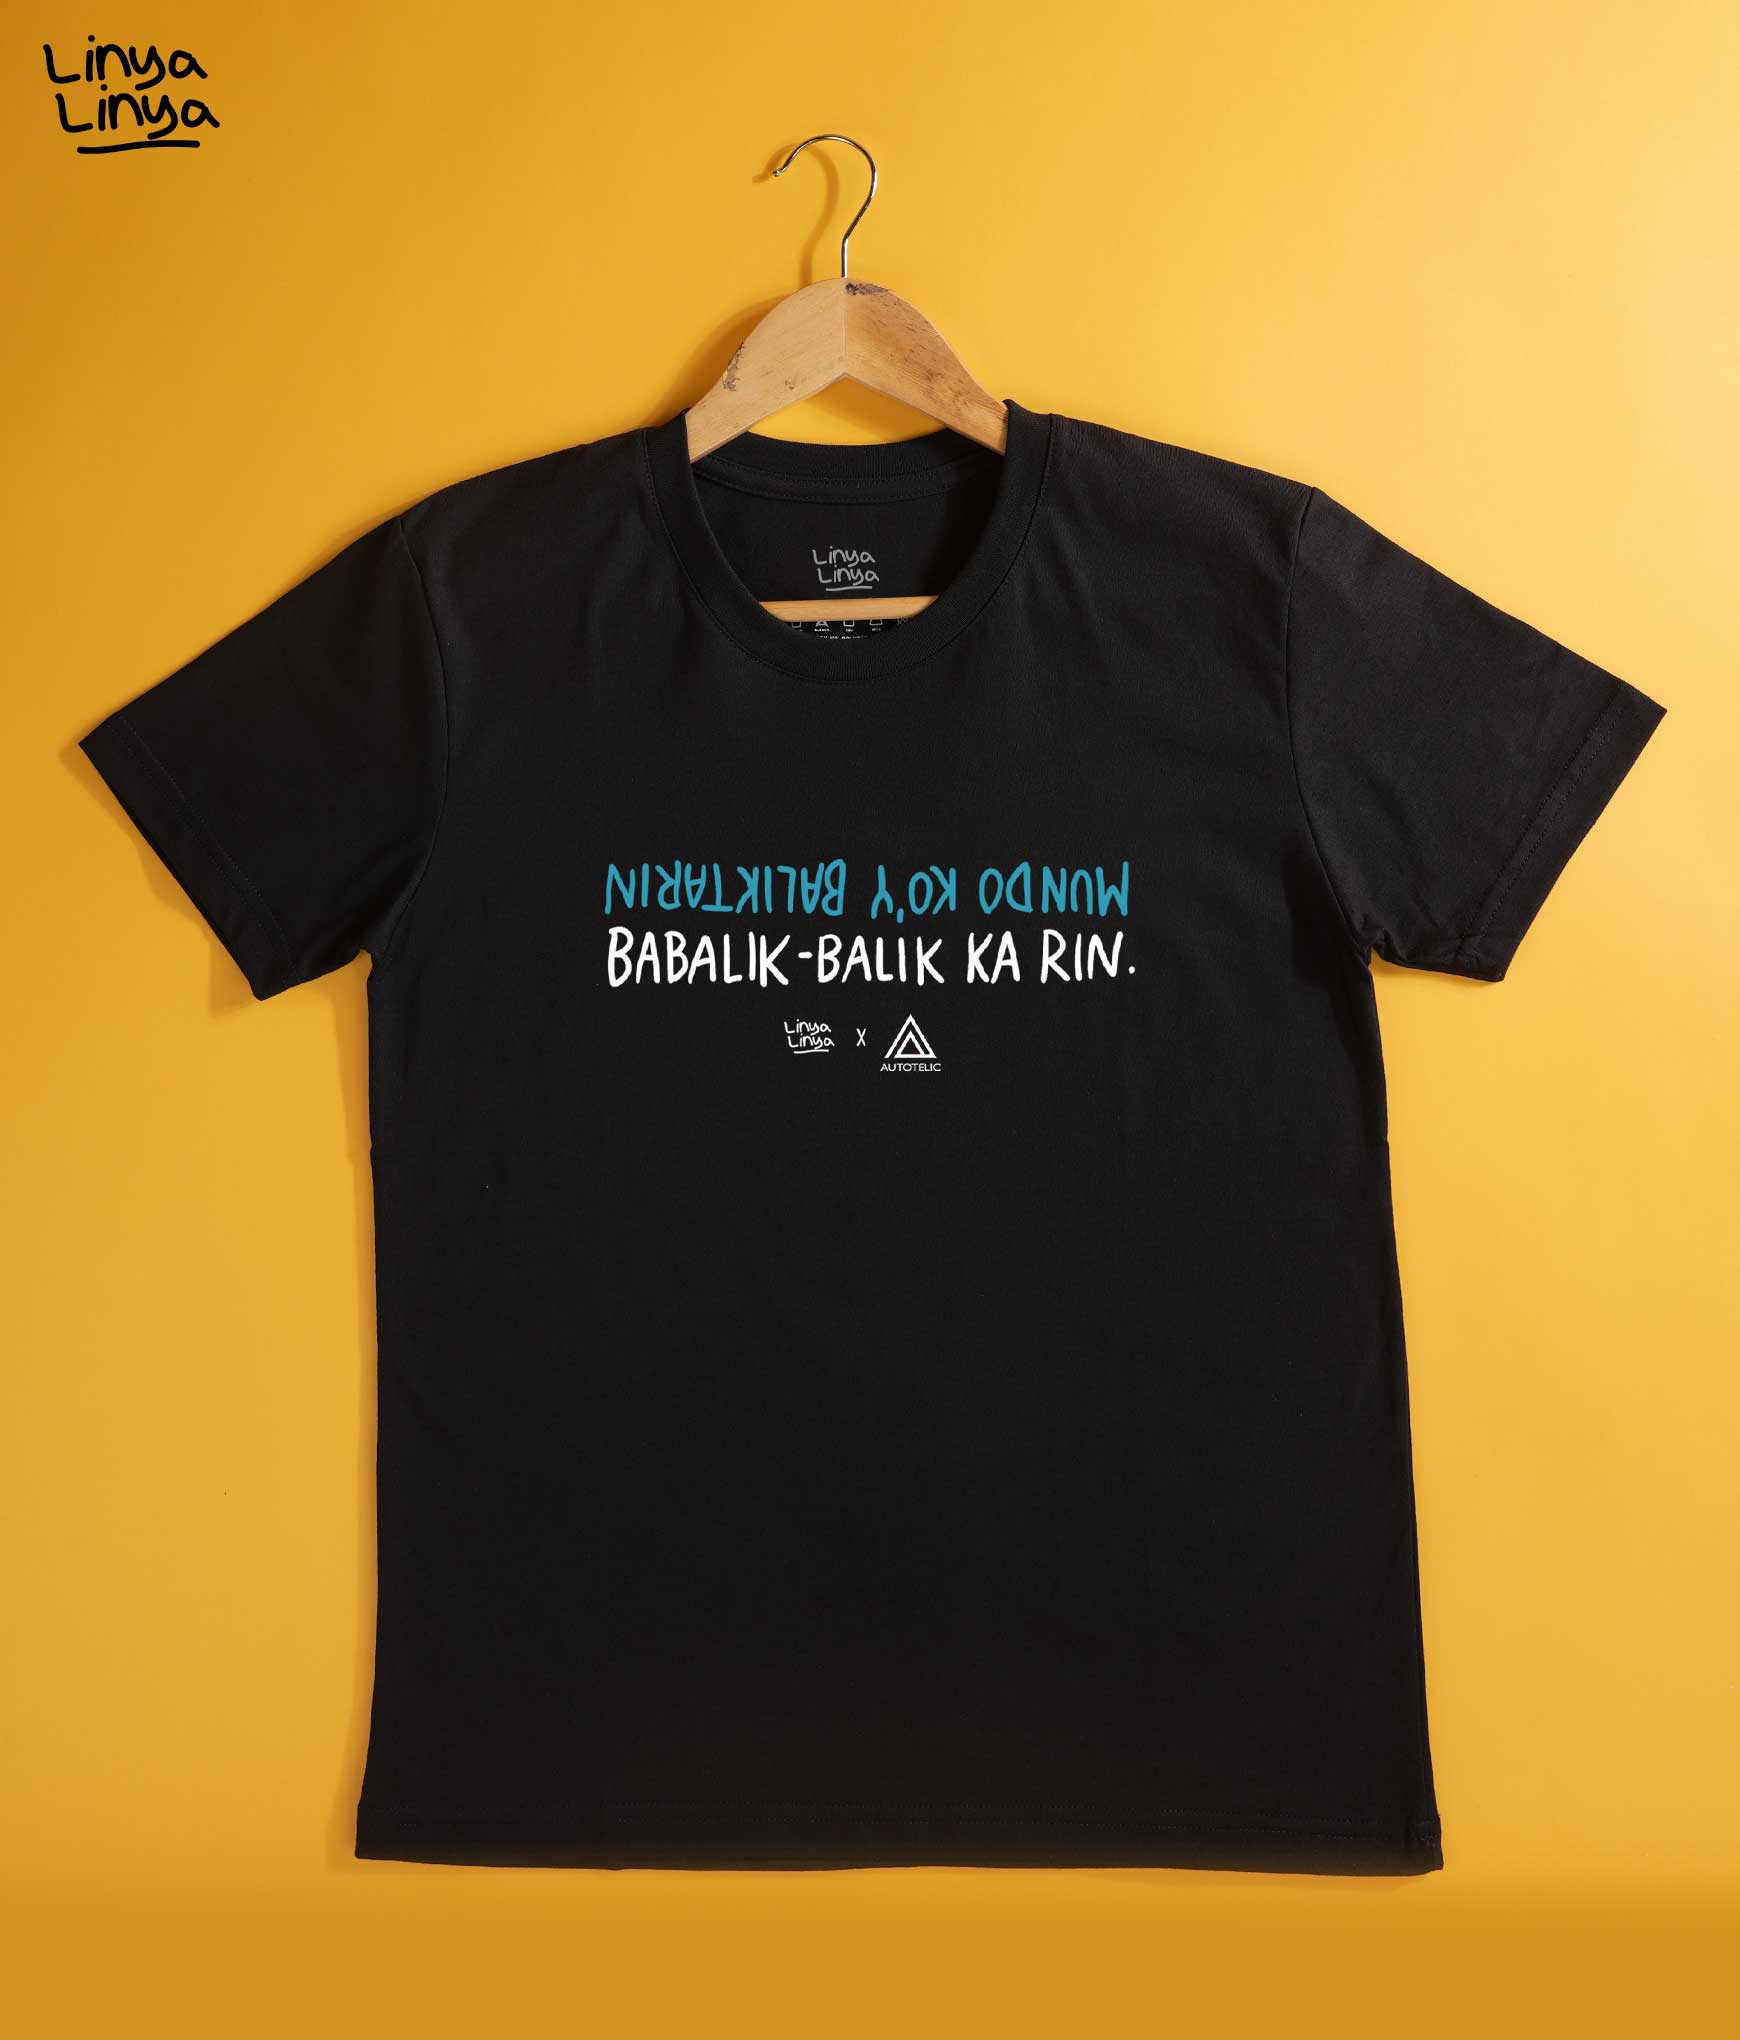 Linya-Linya x Autotelic Limited Edition - LANGUYIN Shirt: Mundo Ko’y B